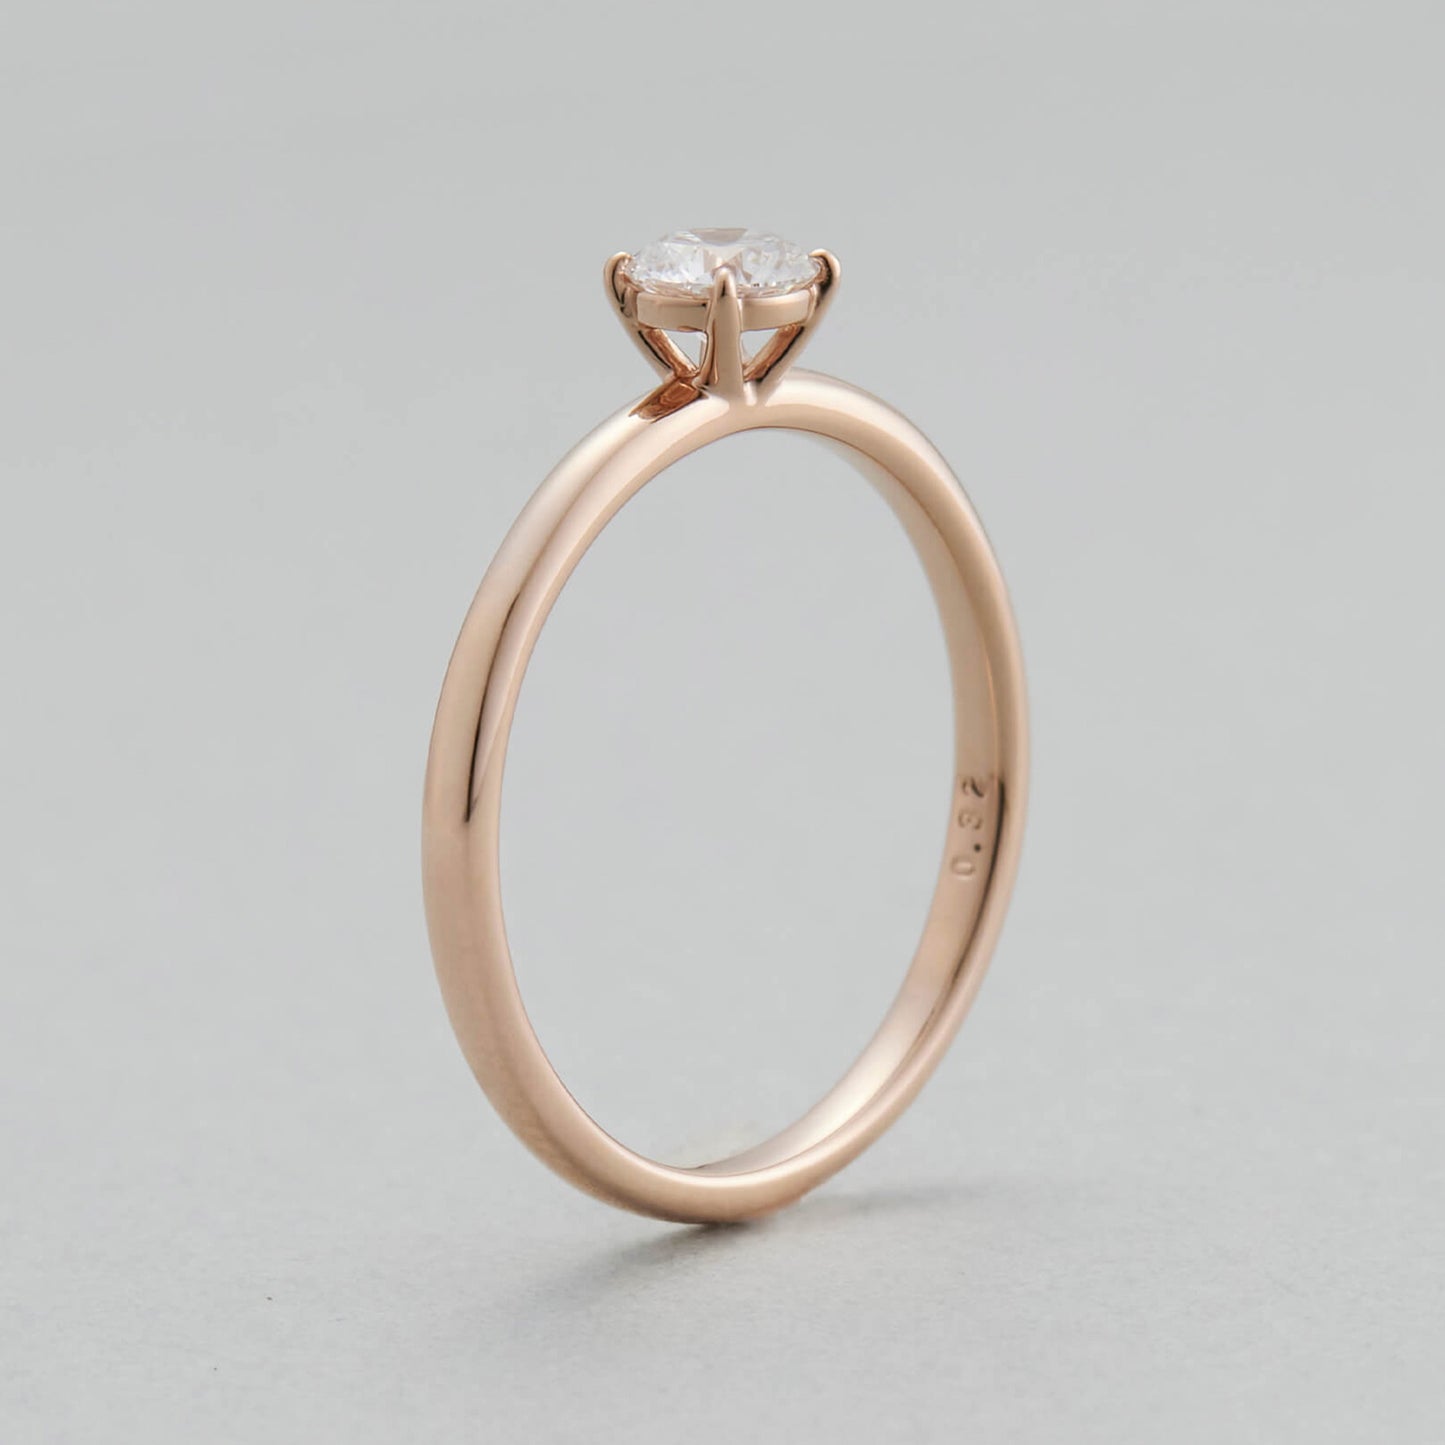 HA SIMPLY Ring / K18 Pink Gold / 0.3 Carat